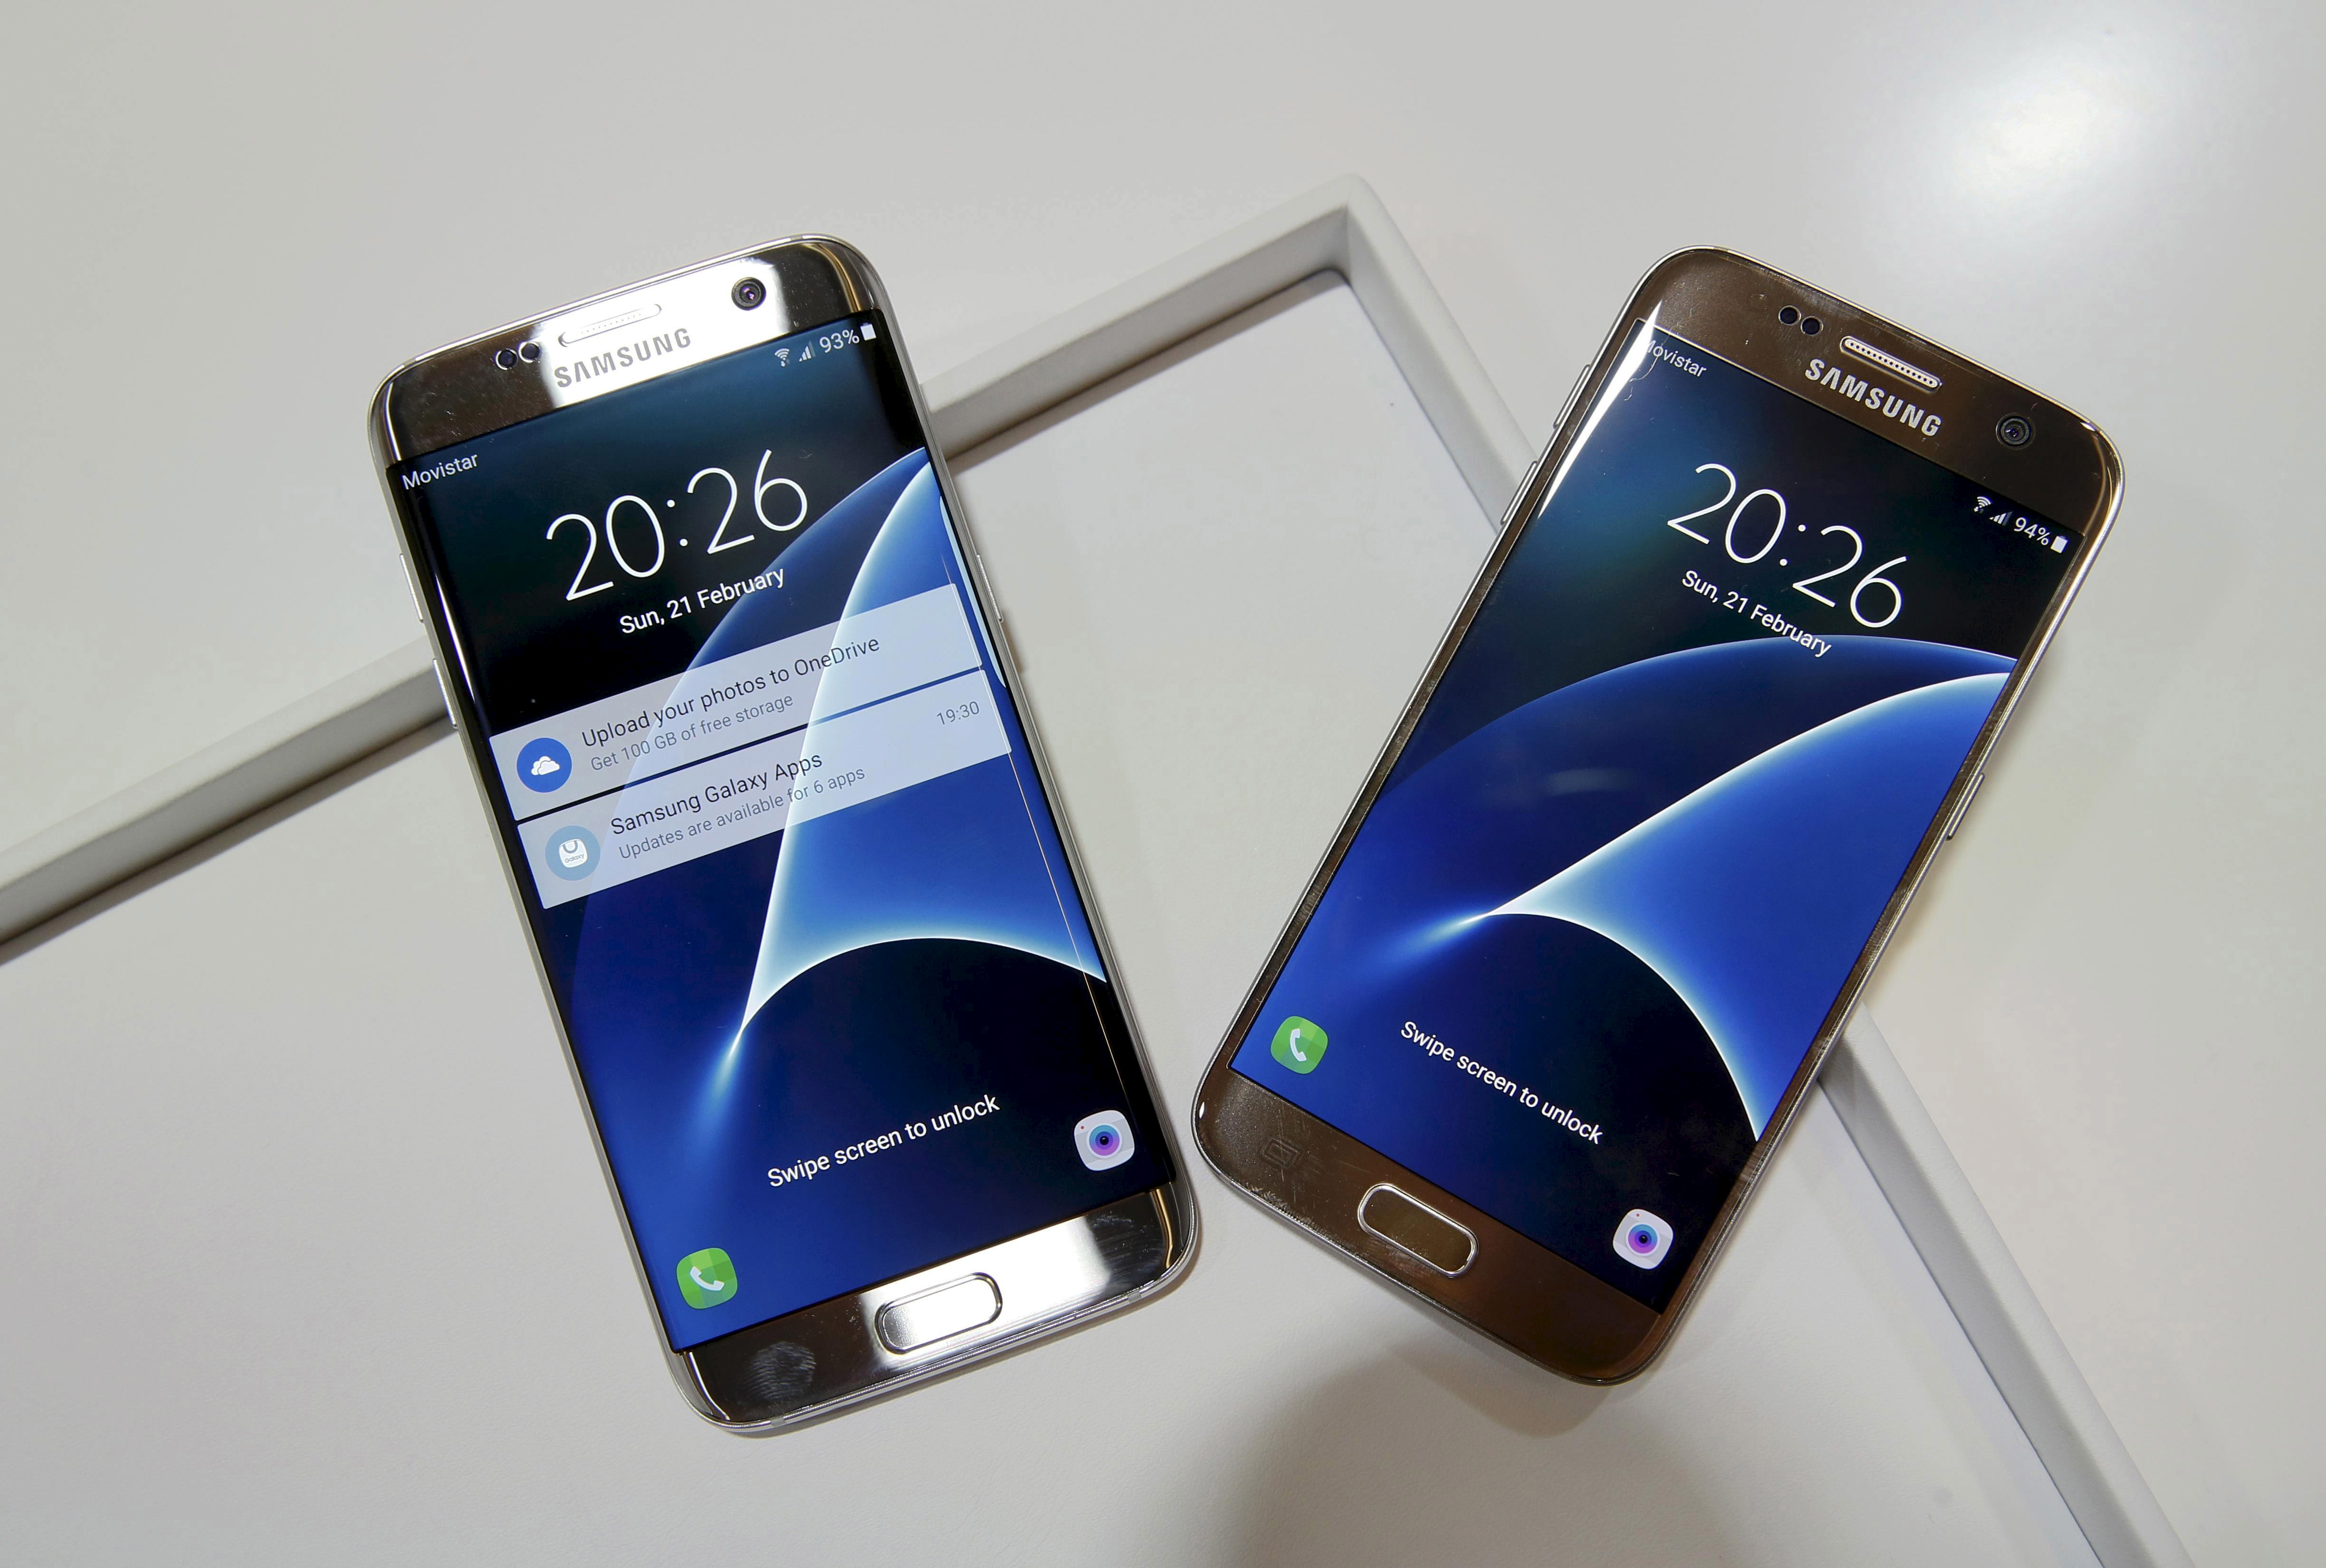 redden radium stijfheid Samsung Galaxy S7 and Galaxy S7 Edge review roundup: Should you upgrade? -  CBS News